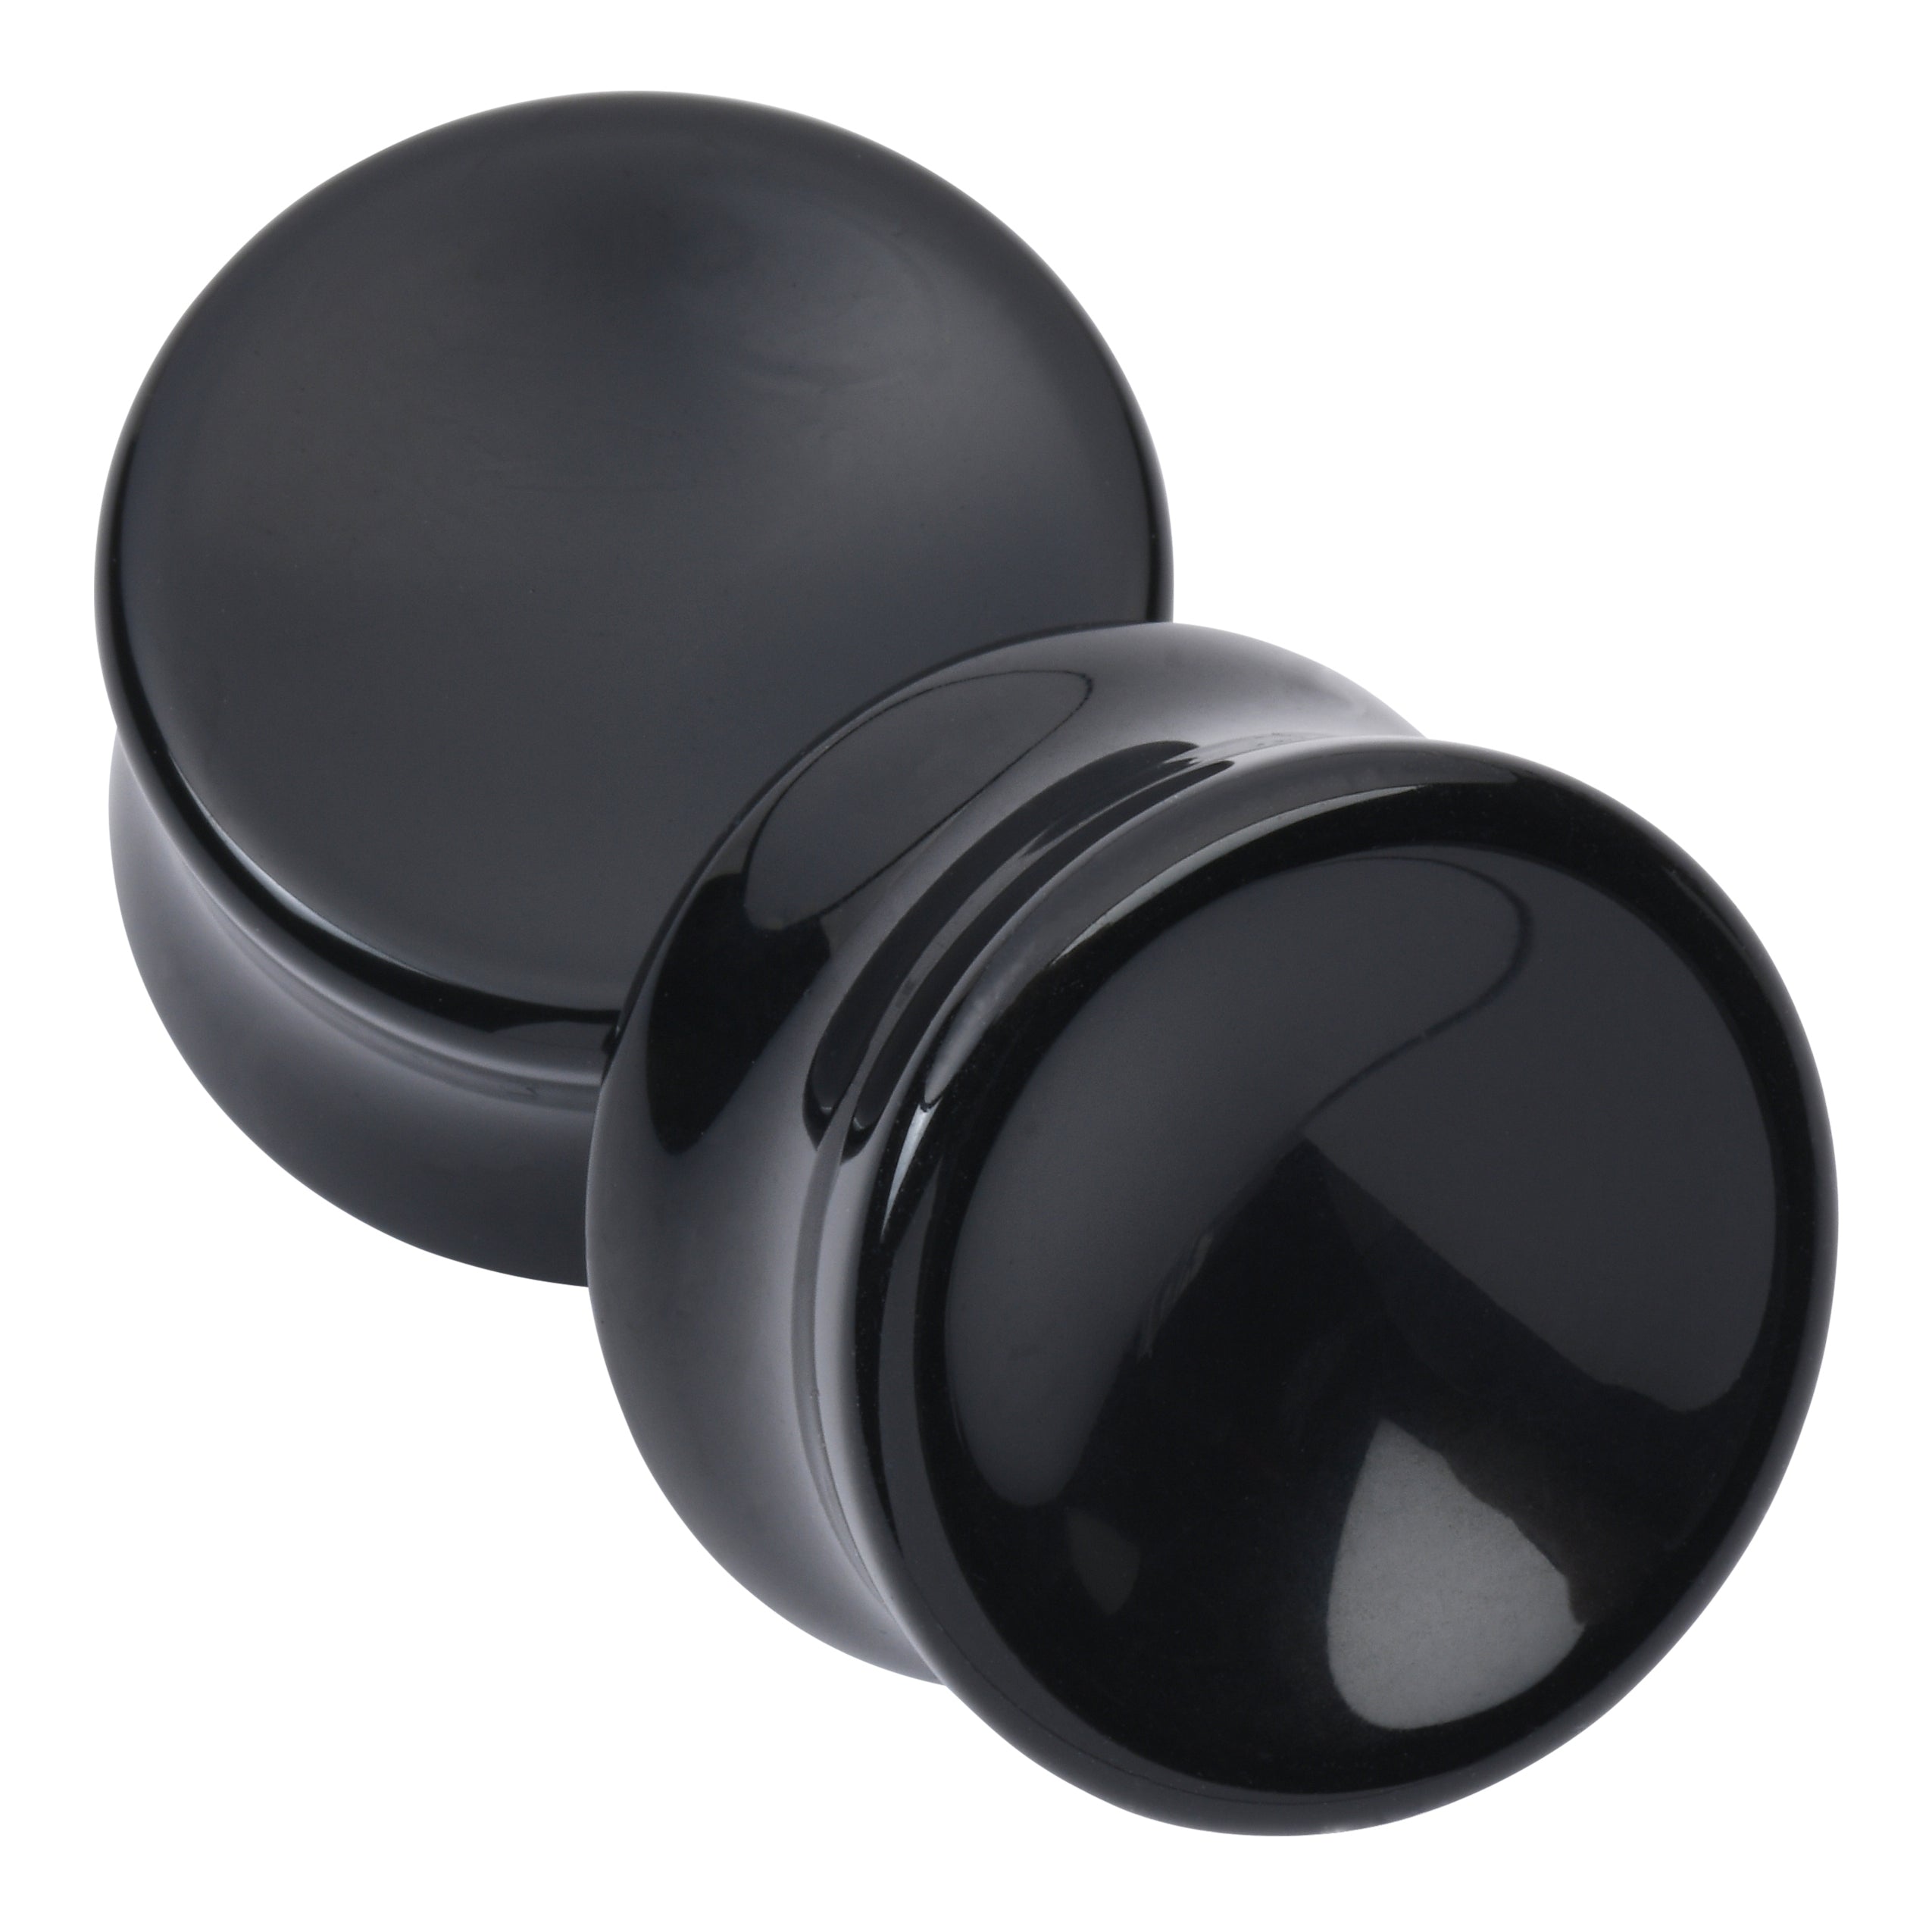 Black Obsidian Concave Plugs Plugs 0 gauge (8mm) Black Obsidian